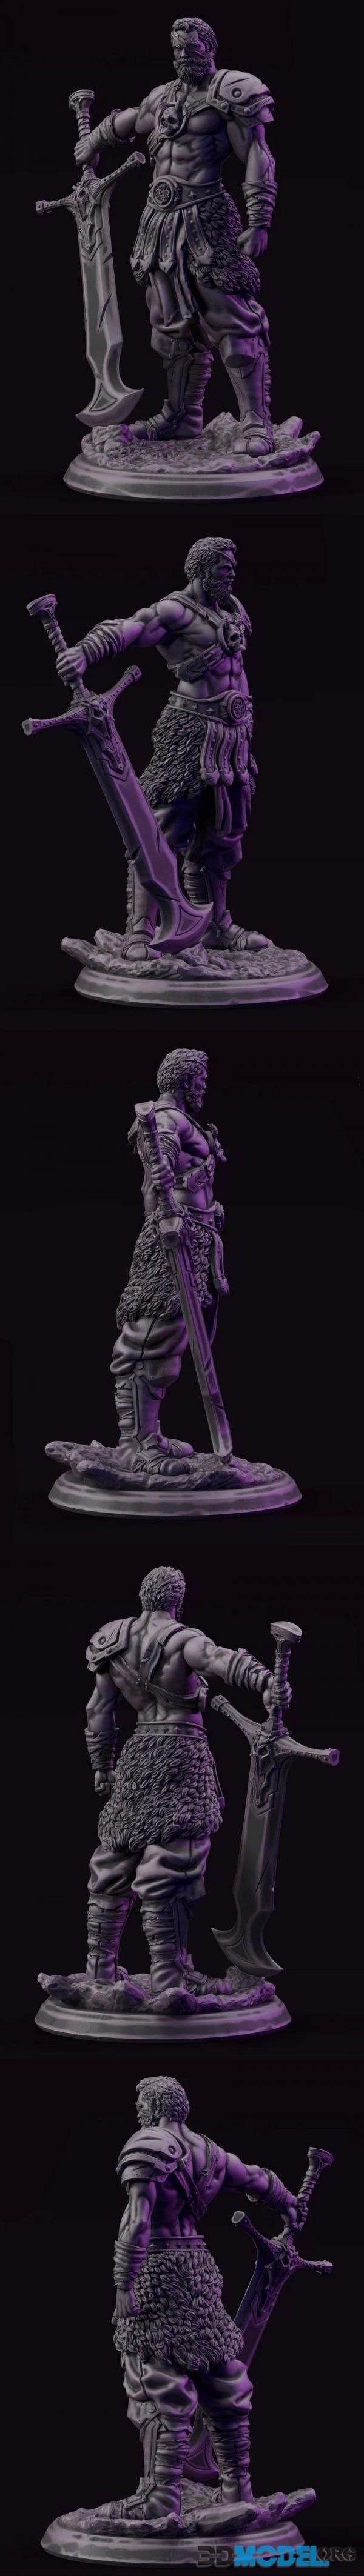 Kabel The Swordsman – Sculpture